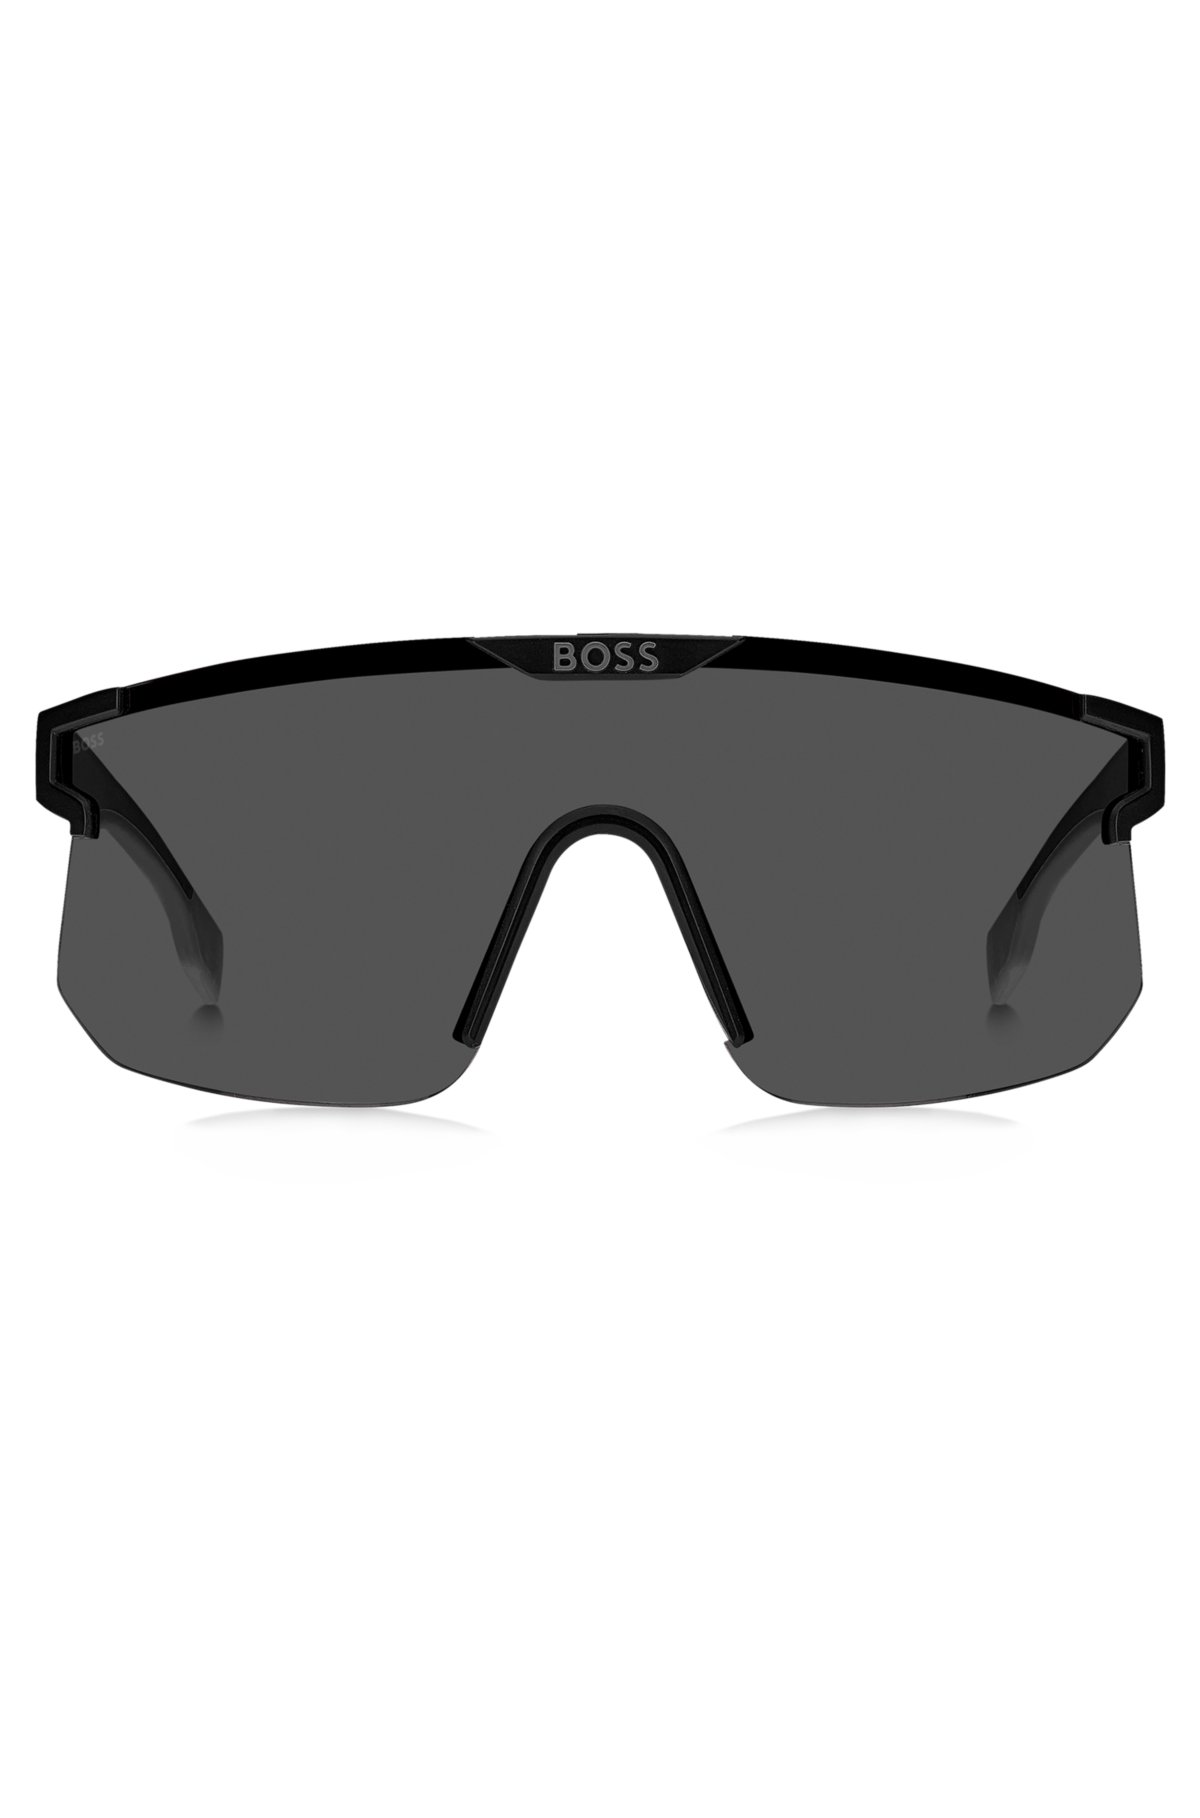 Schwarze Sonnenbrille, Accessoires, Sacha